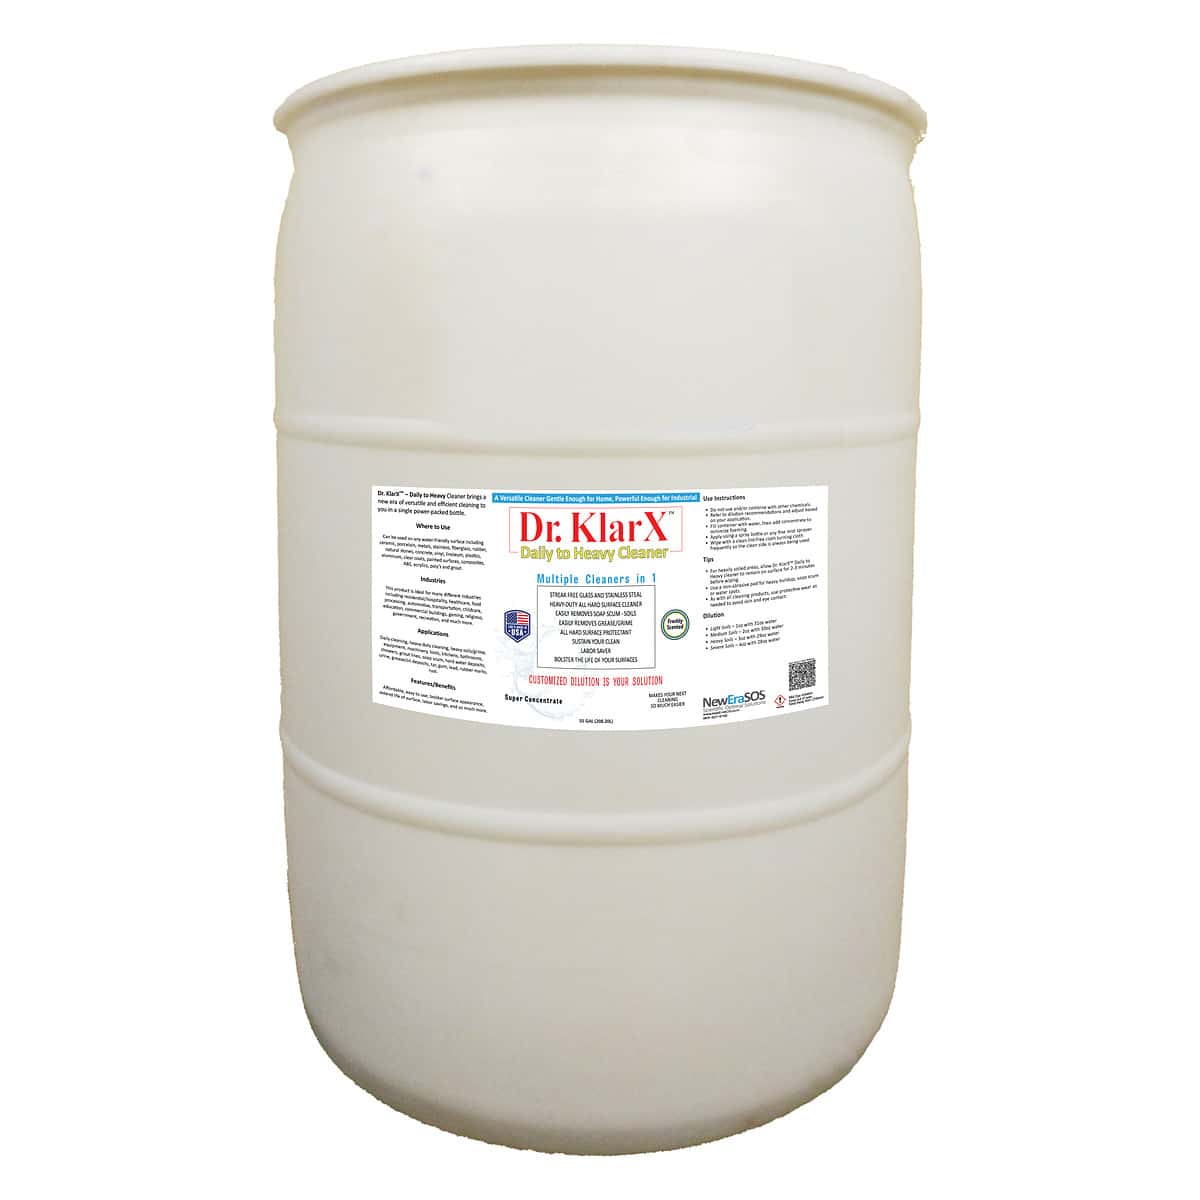 Dr. KlarX Daily to Heavy - 55-Gallon Drum